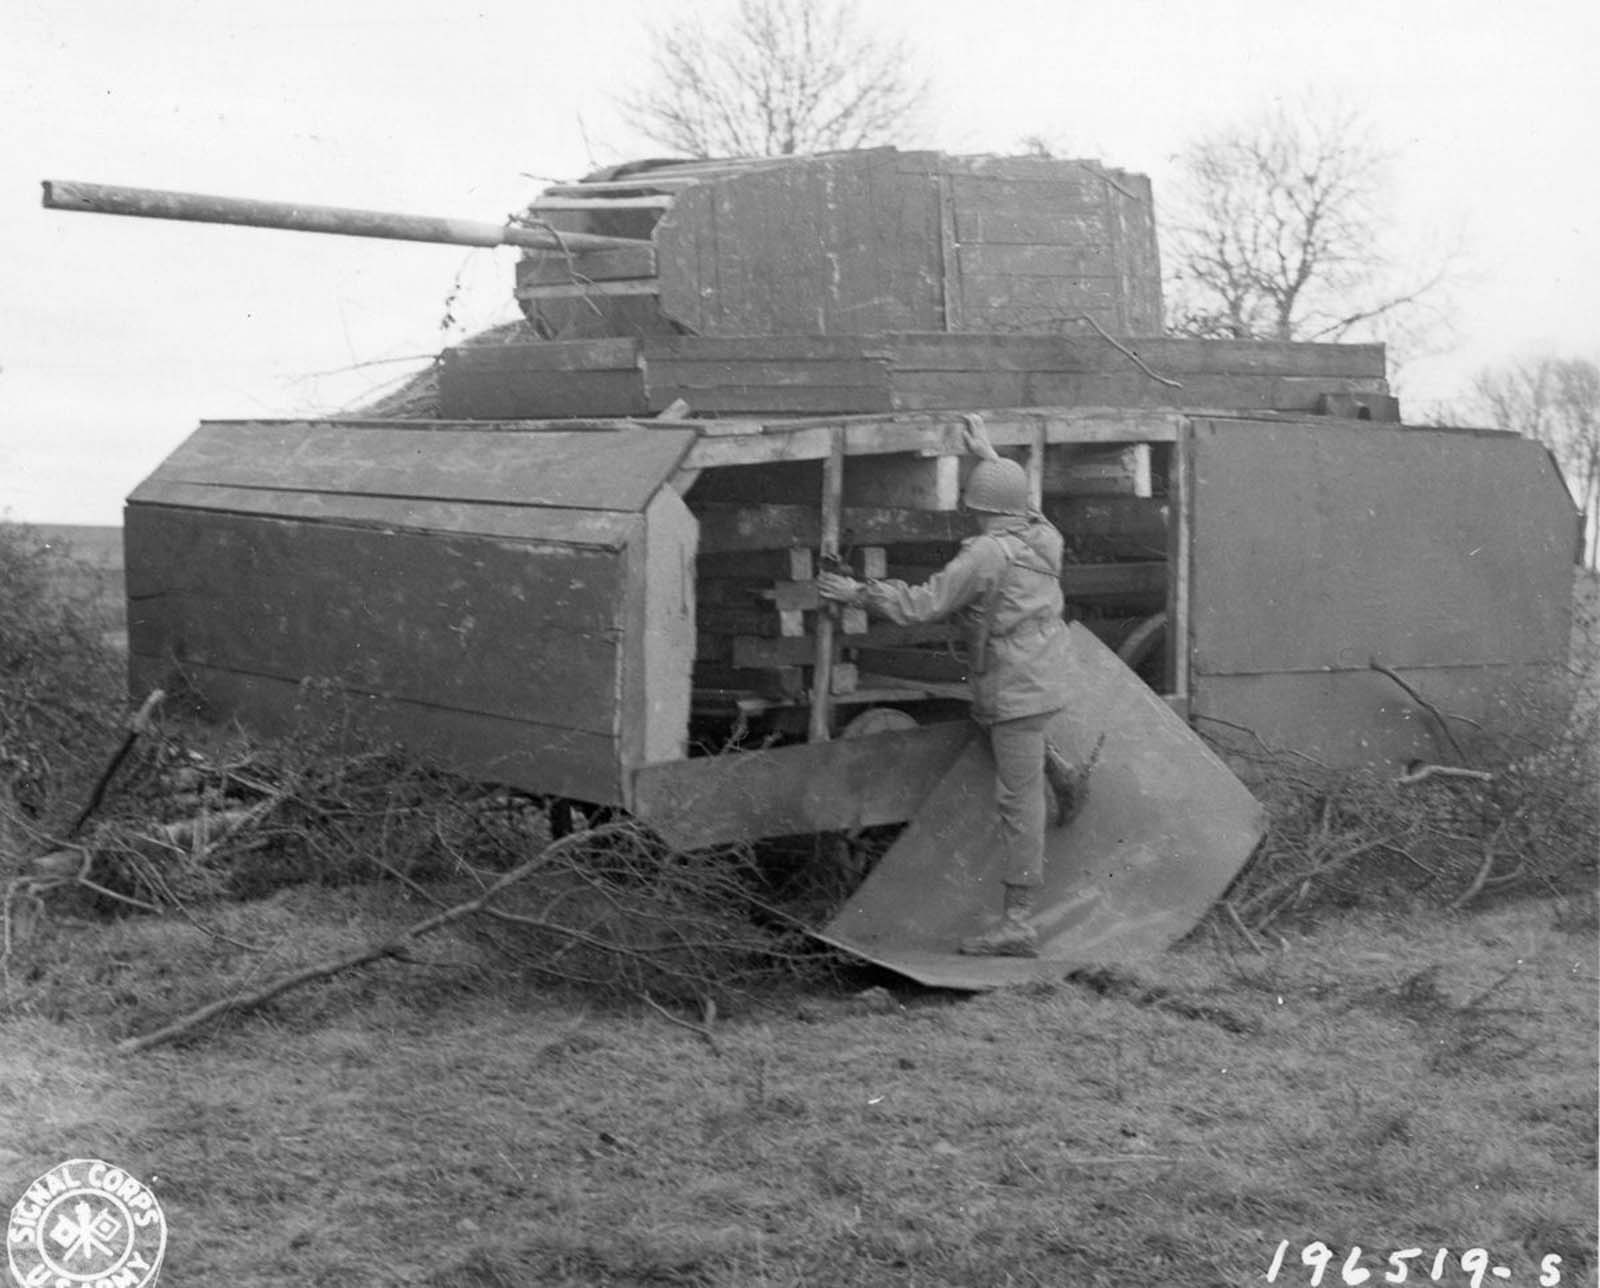 An American soldier inspects a German dummy tank in Metz, France. 1944.